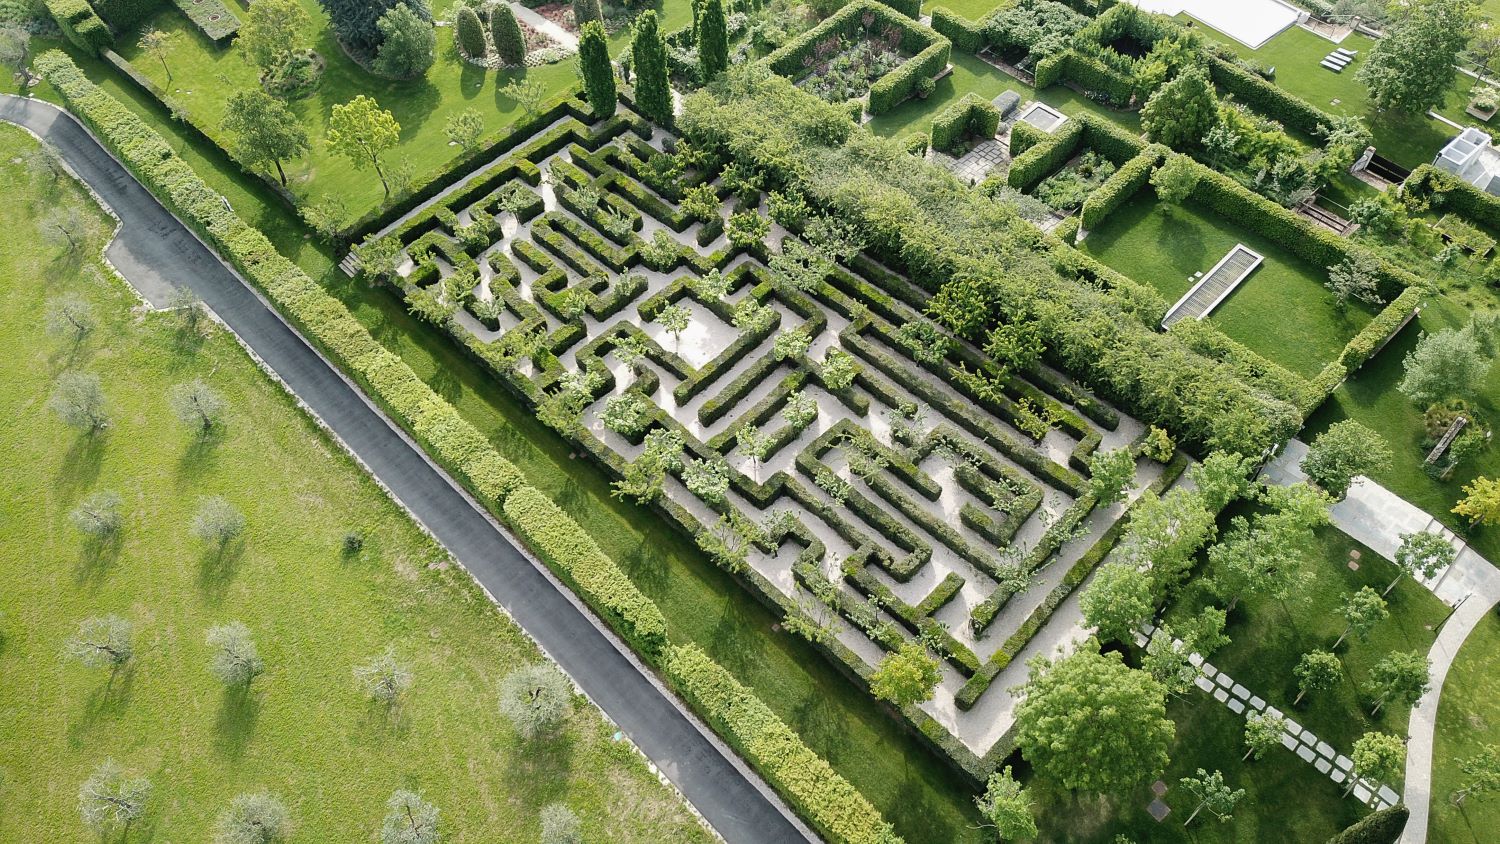 The Carlic Labyrinth